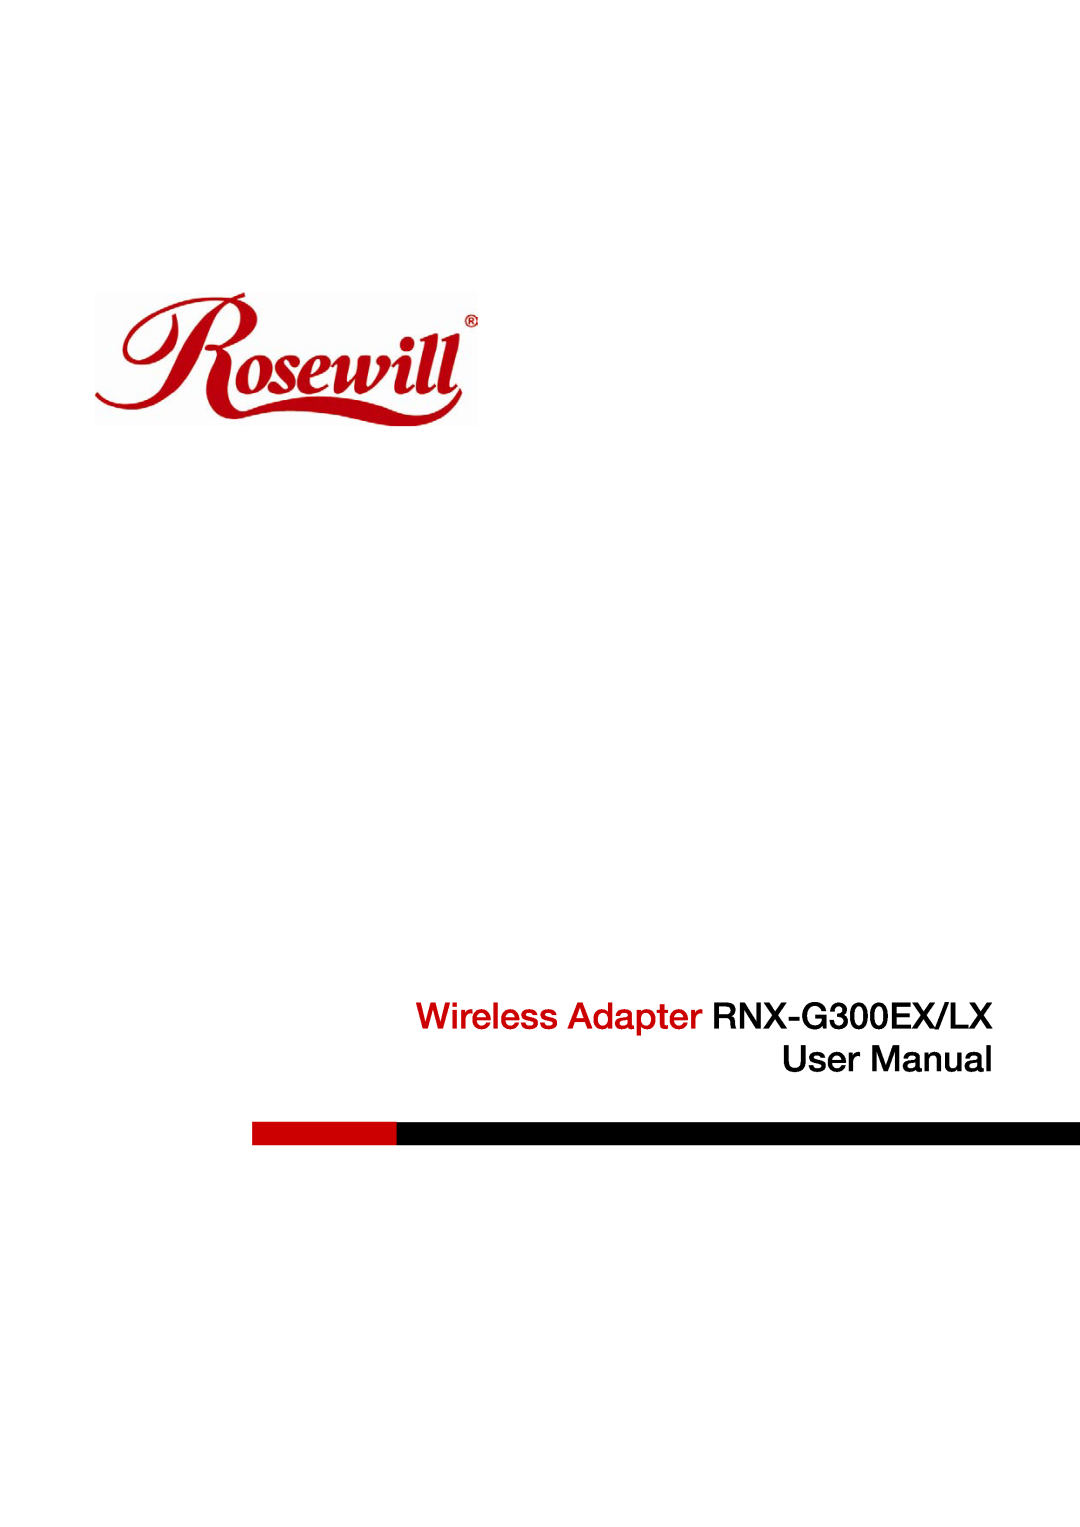 Rosewill RNX-G300EXLX user manual Wireless Adapter RNX-G300EX/LX, User Manual 